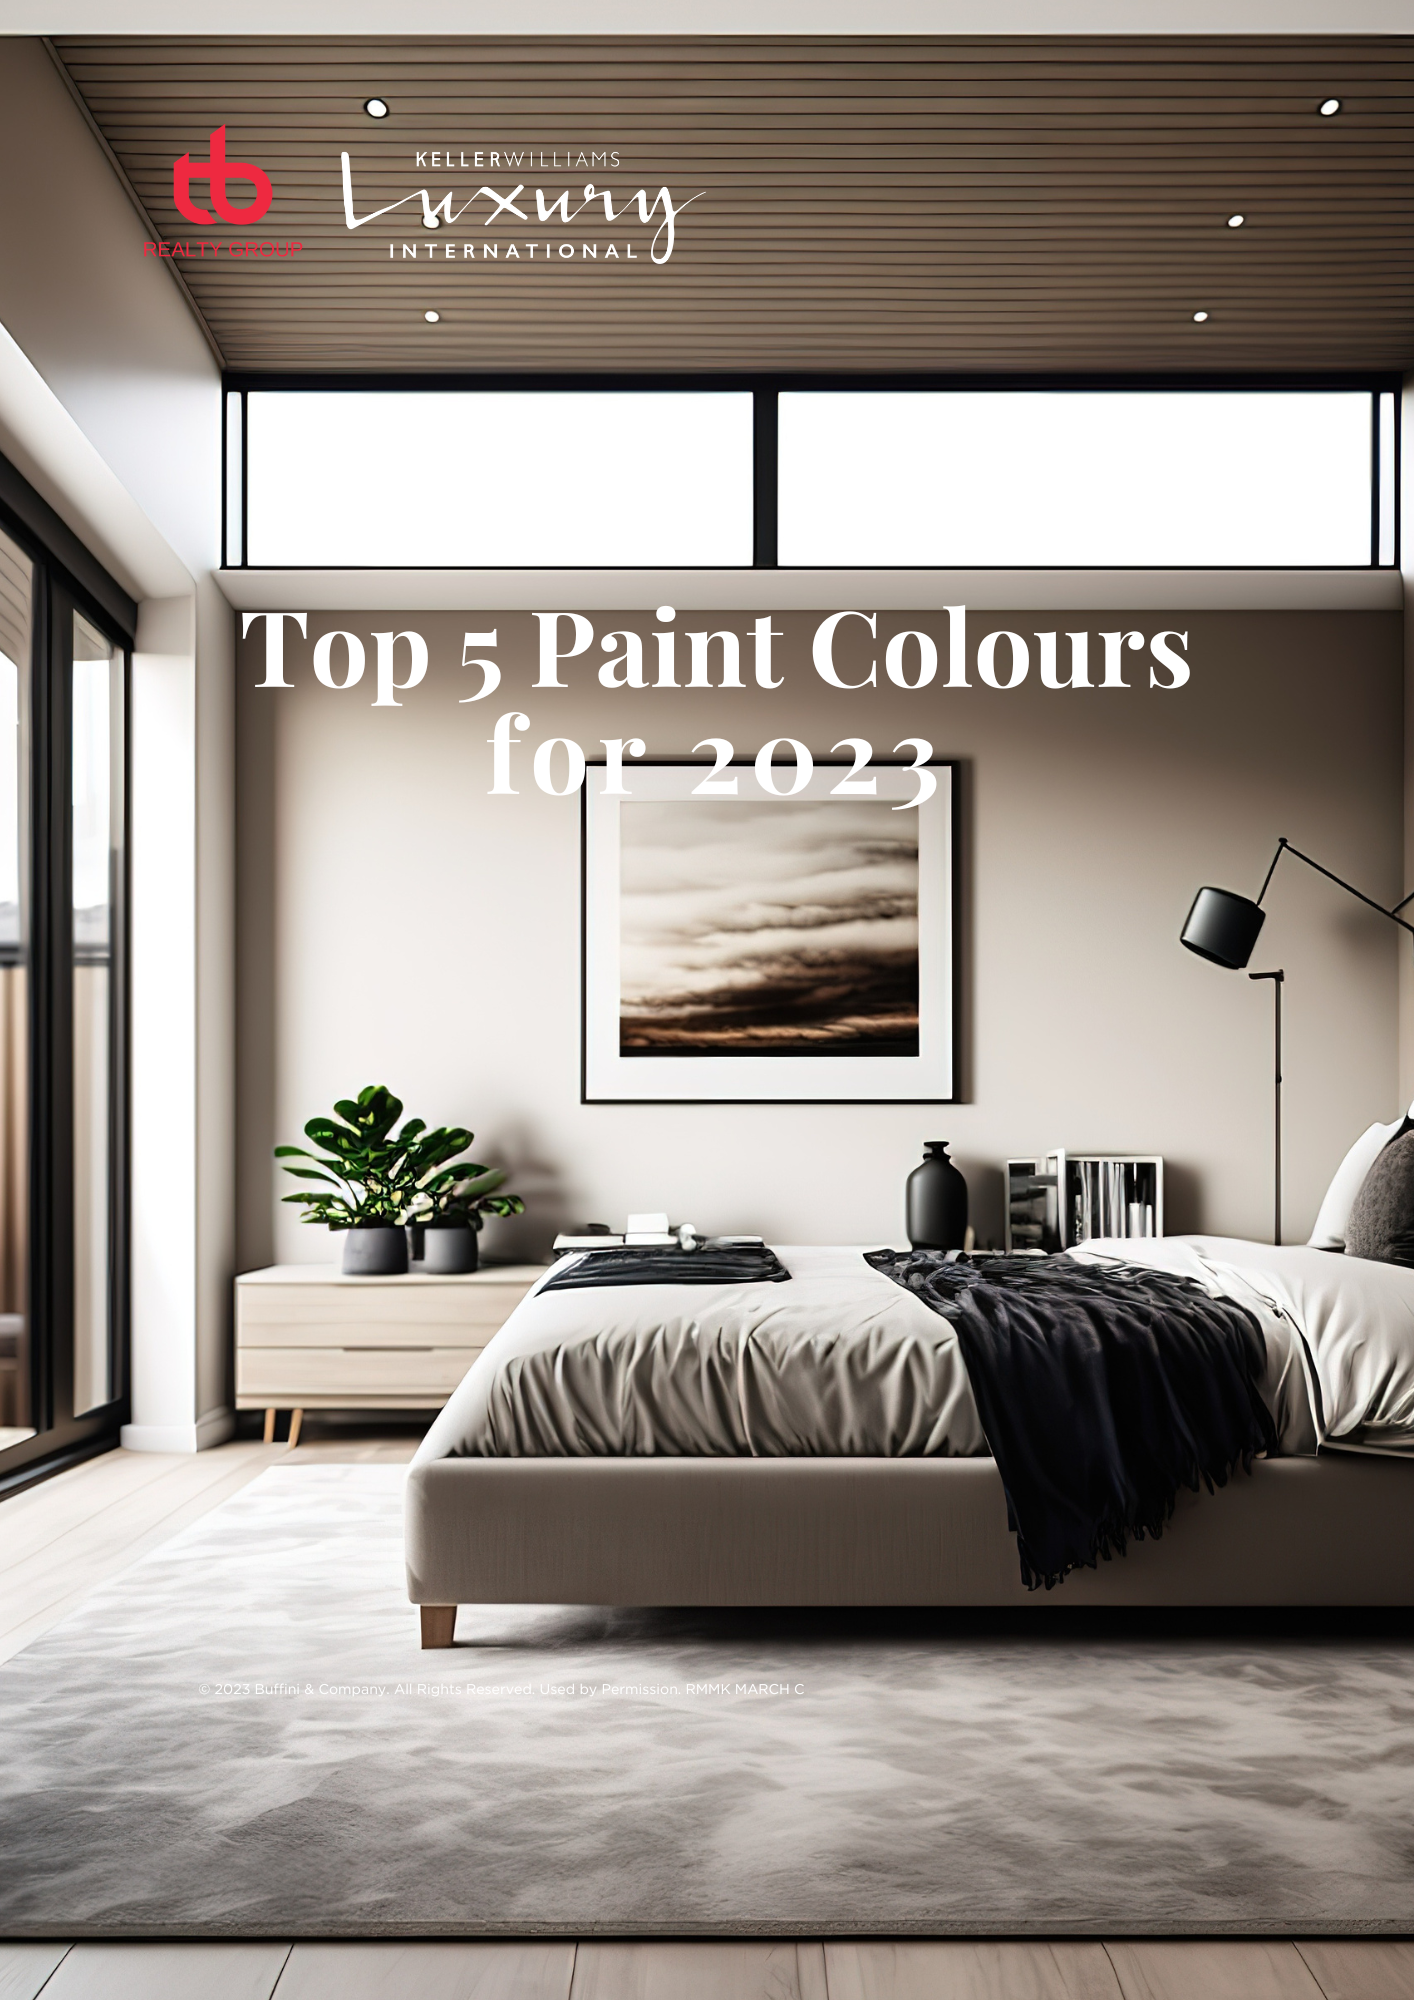 Top 5 Paint Colours for 2023